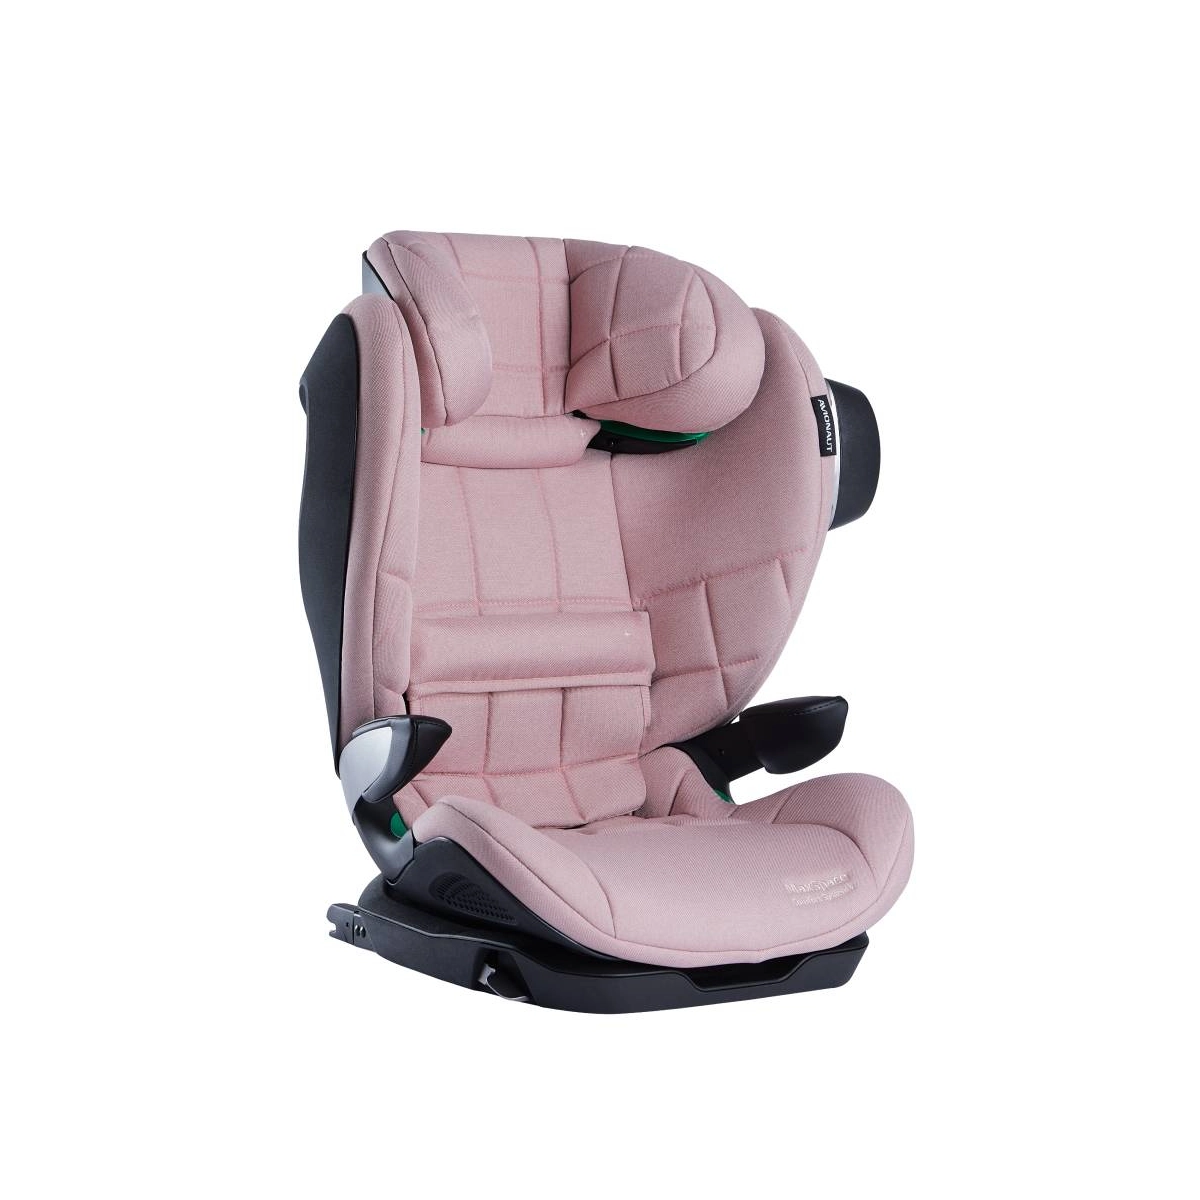 Avionaut MaxSpace Comfort System+ Car Seat